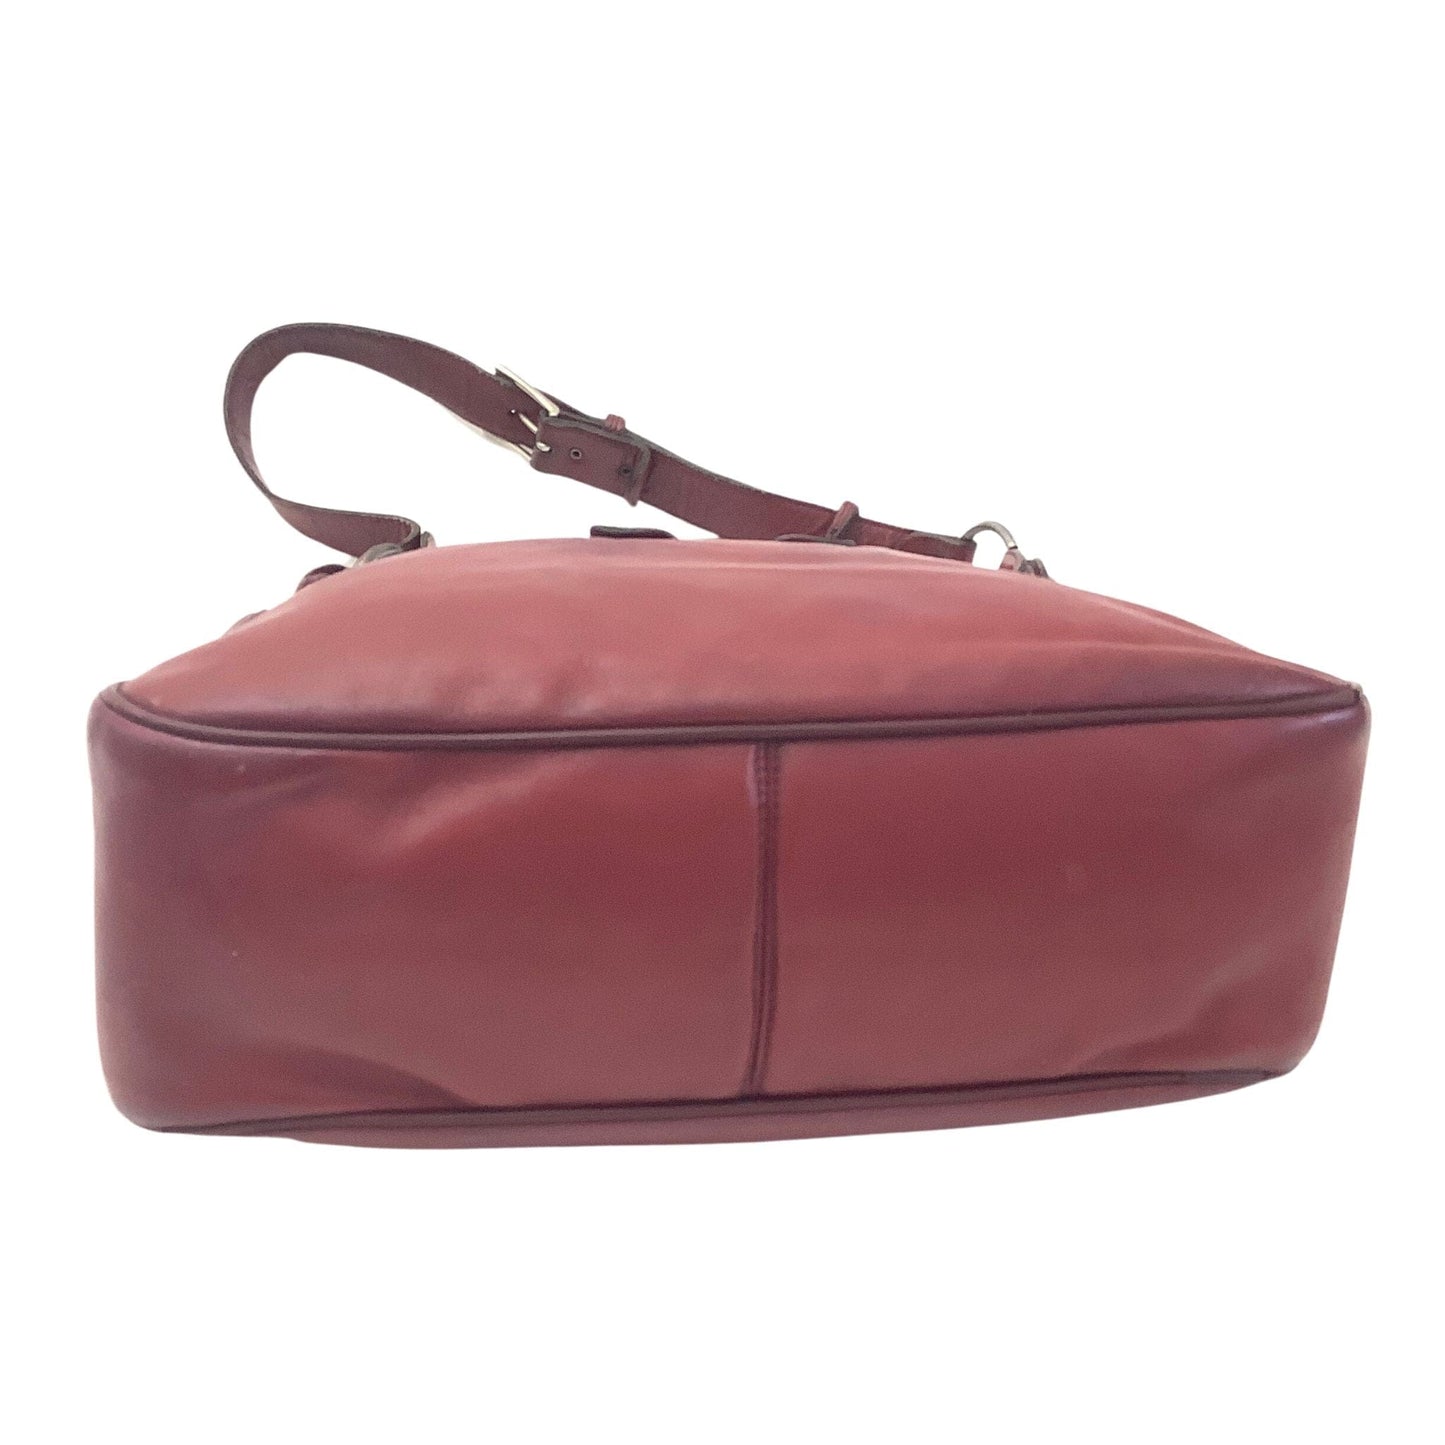 Distressed Aigner Bag Burgundy / Leather / Vintage 1970s